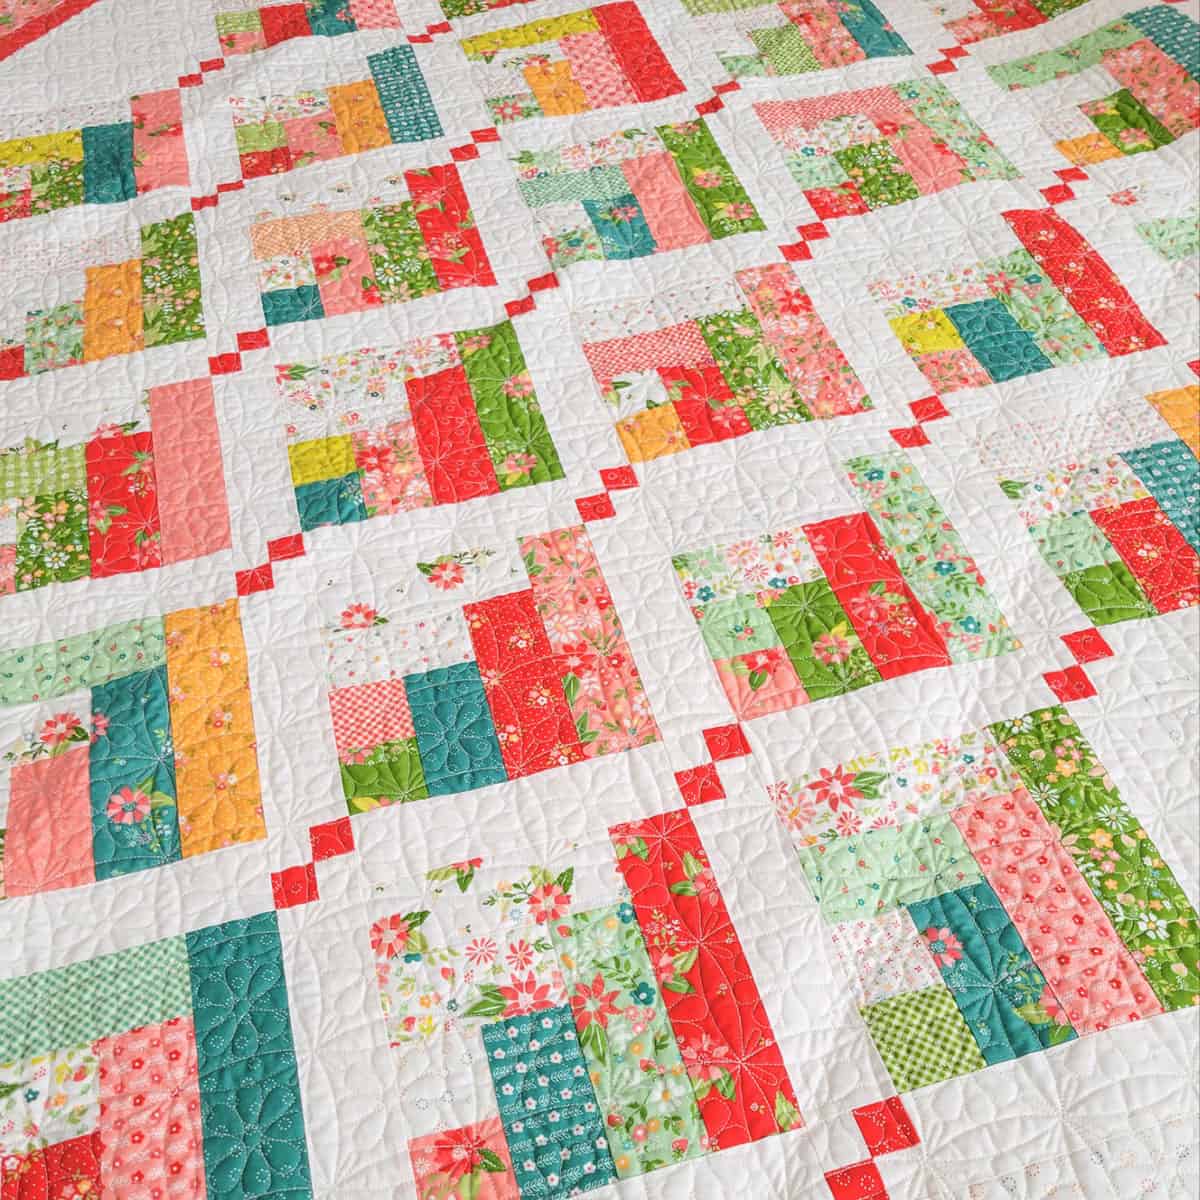 Season's Greetings quilt in Strawberry Lemonade fabrics by Sherri & Chelsi for Moda Fabrics